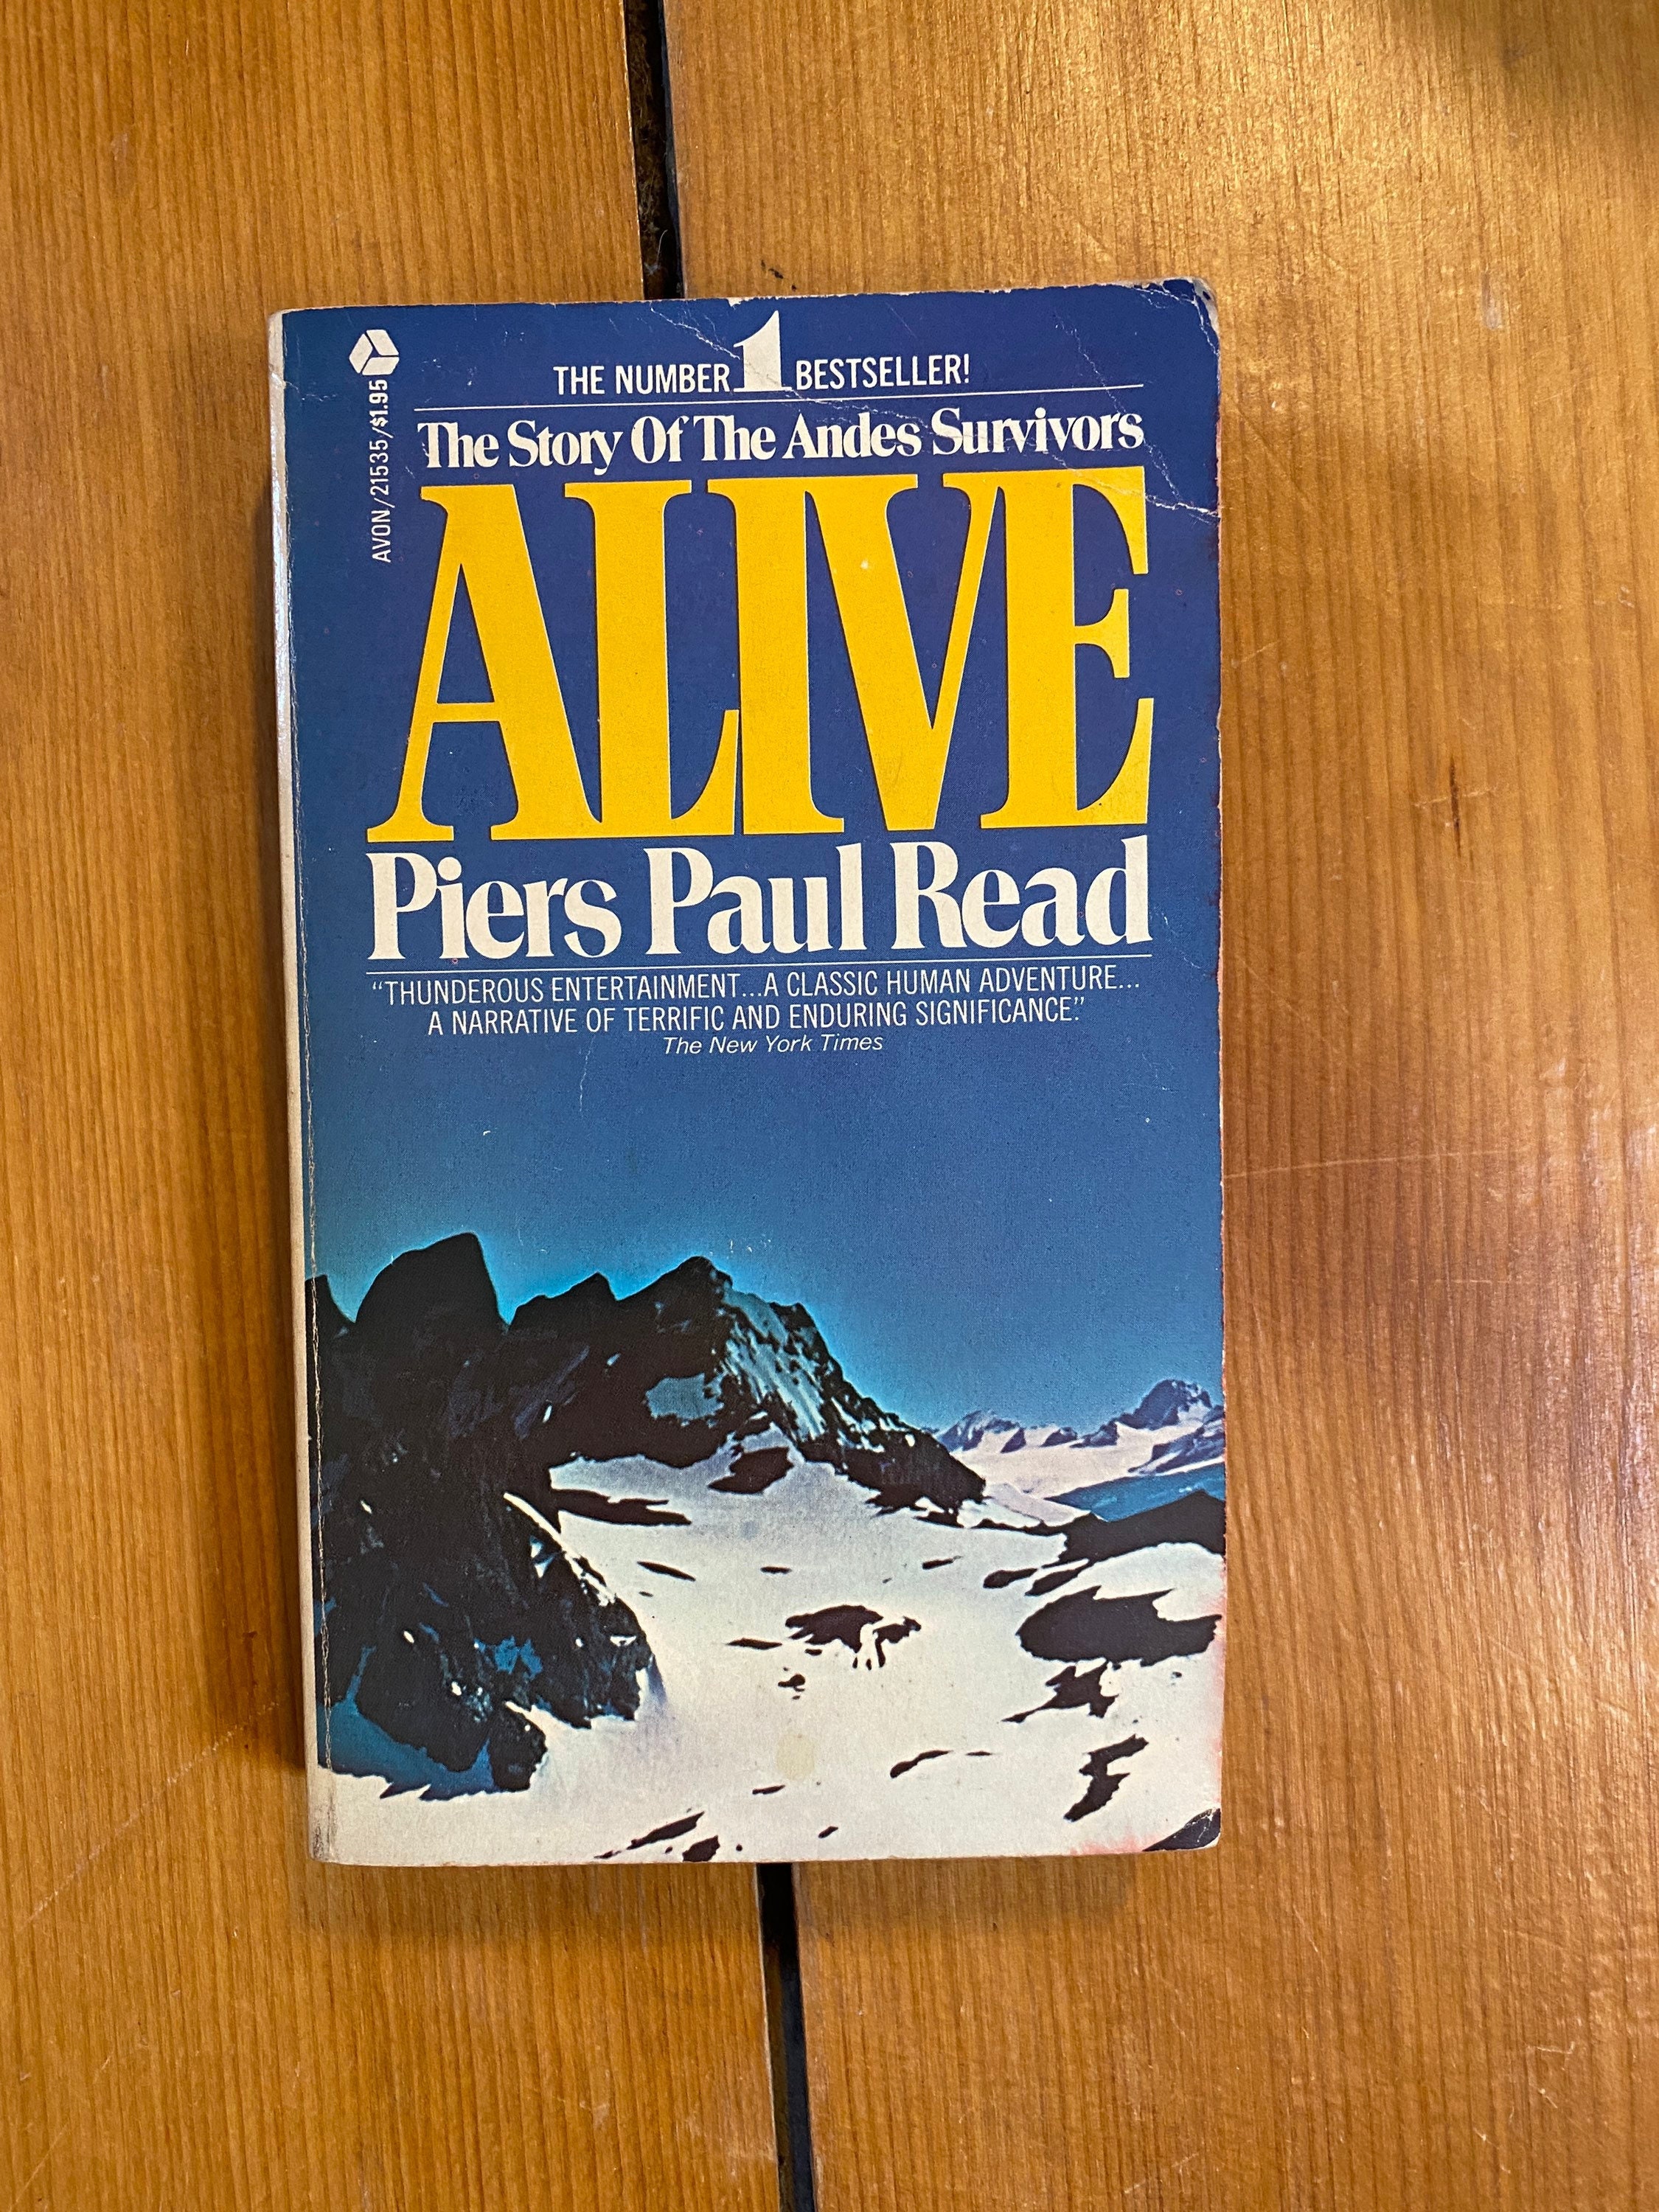  VIVEN PIERS PAUL READ (Spanish Edition): 9788466311908: Read,  Piers Paul: Libros